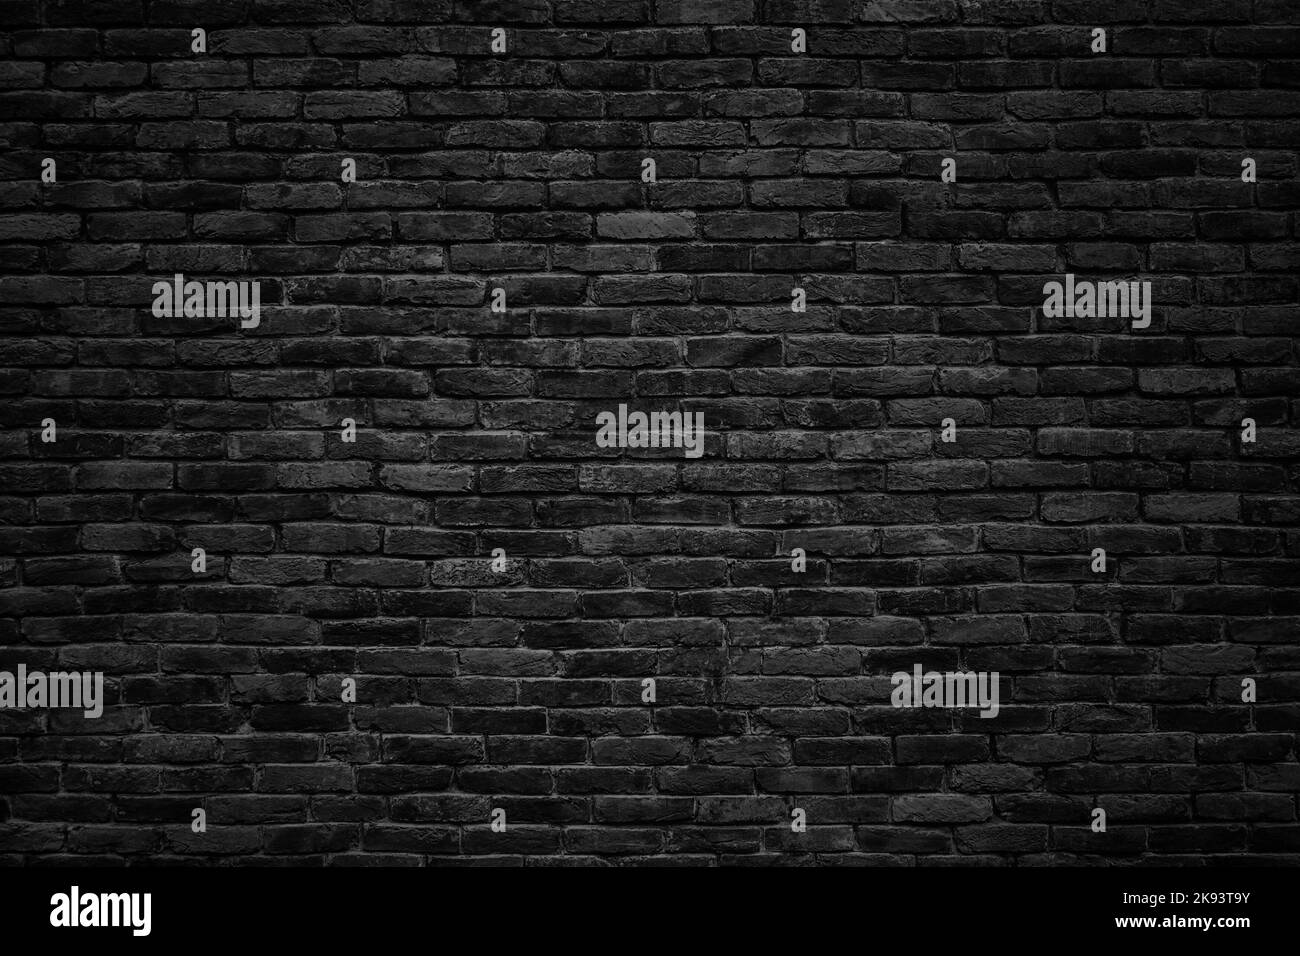 gloomy background, black brick wall of dark stone texture Stock Photo